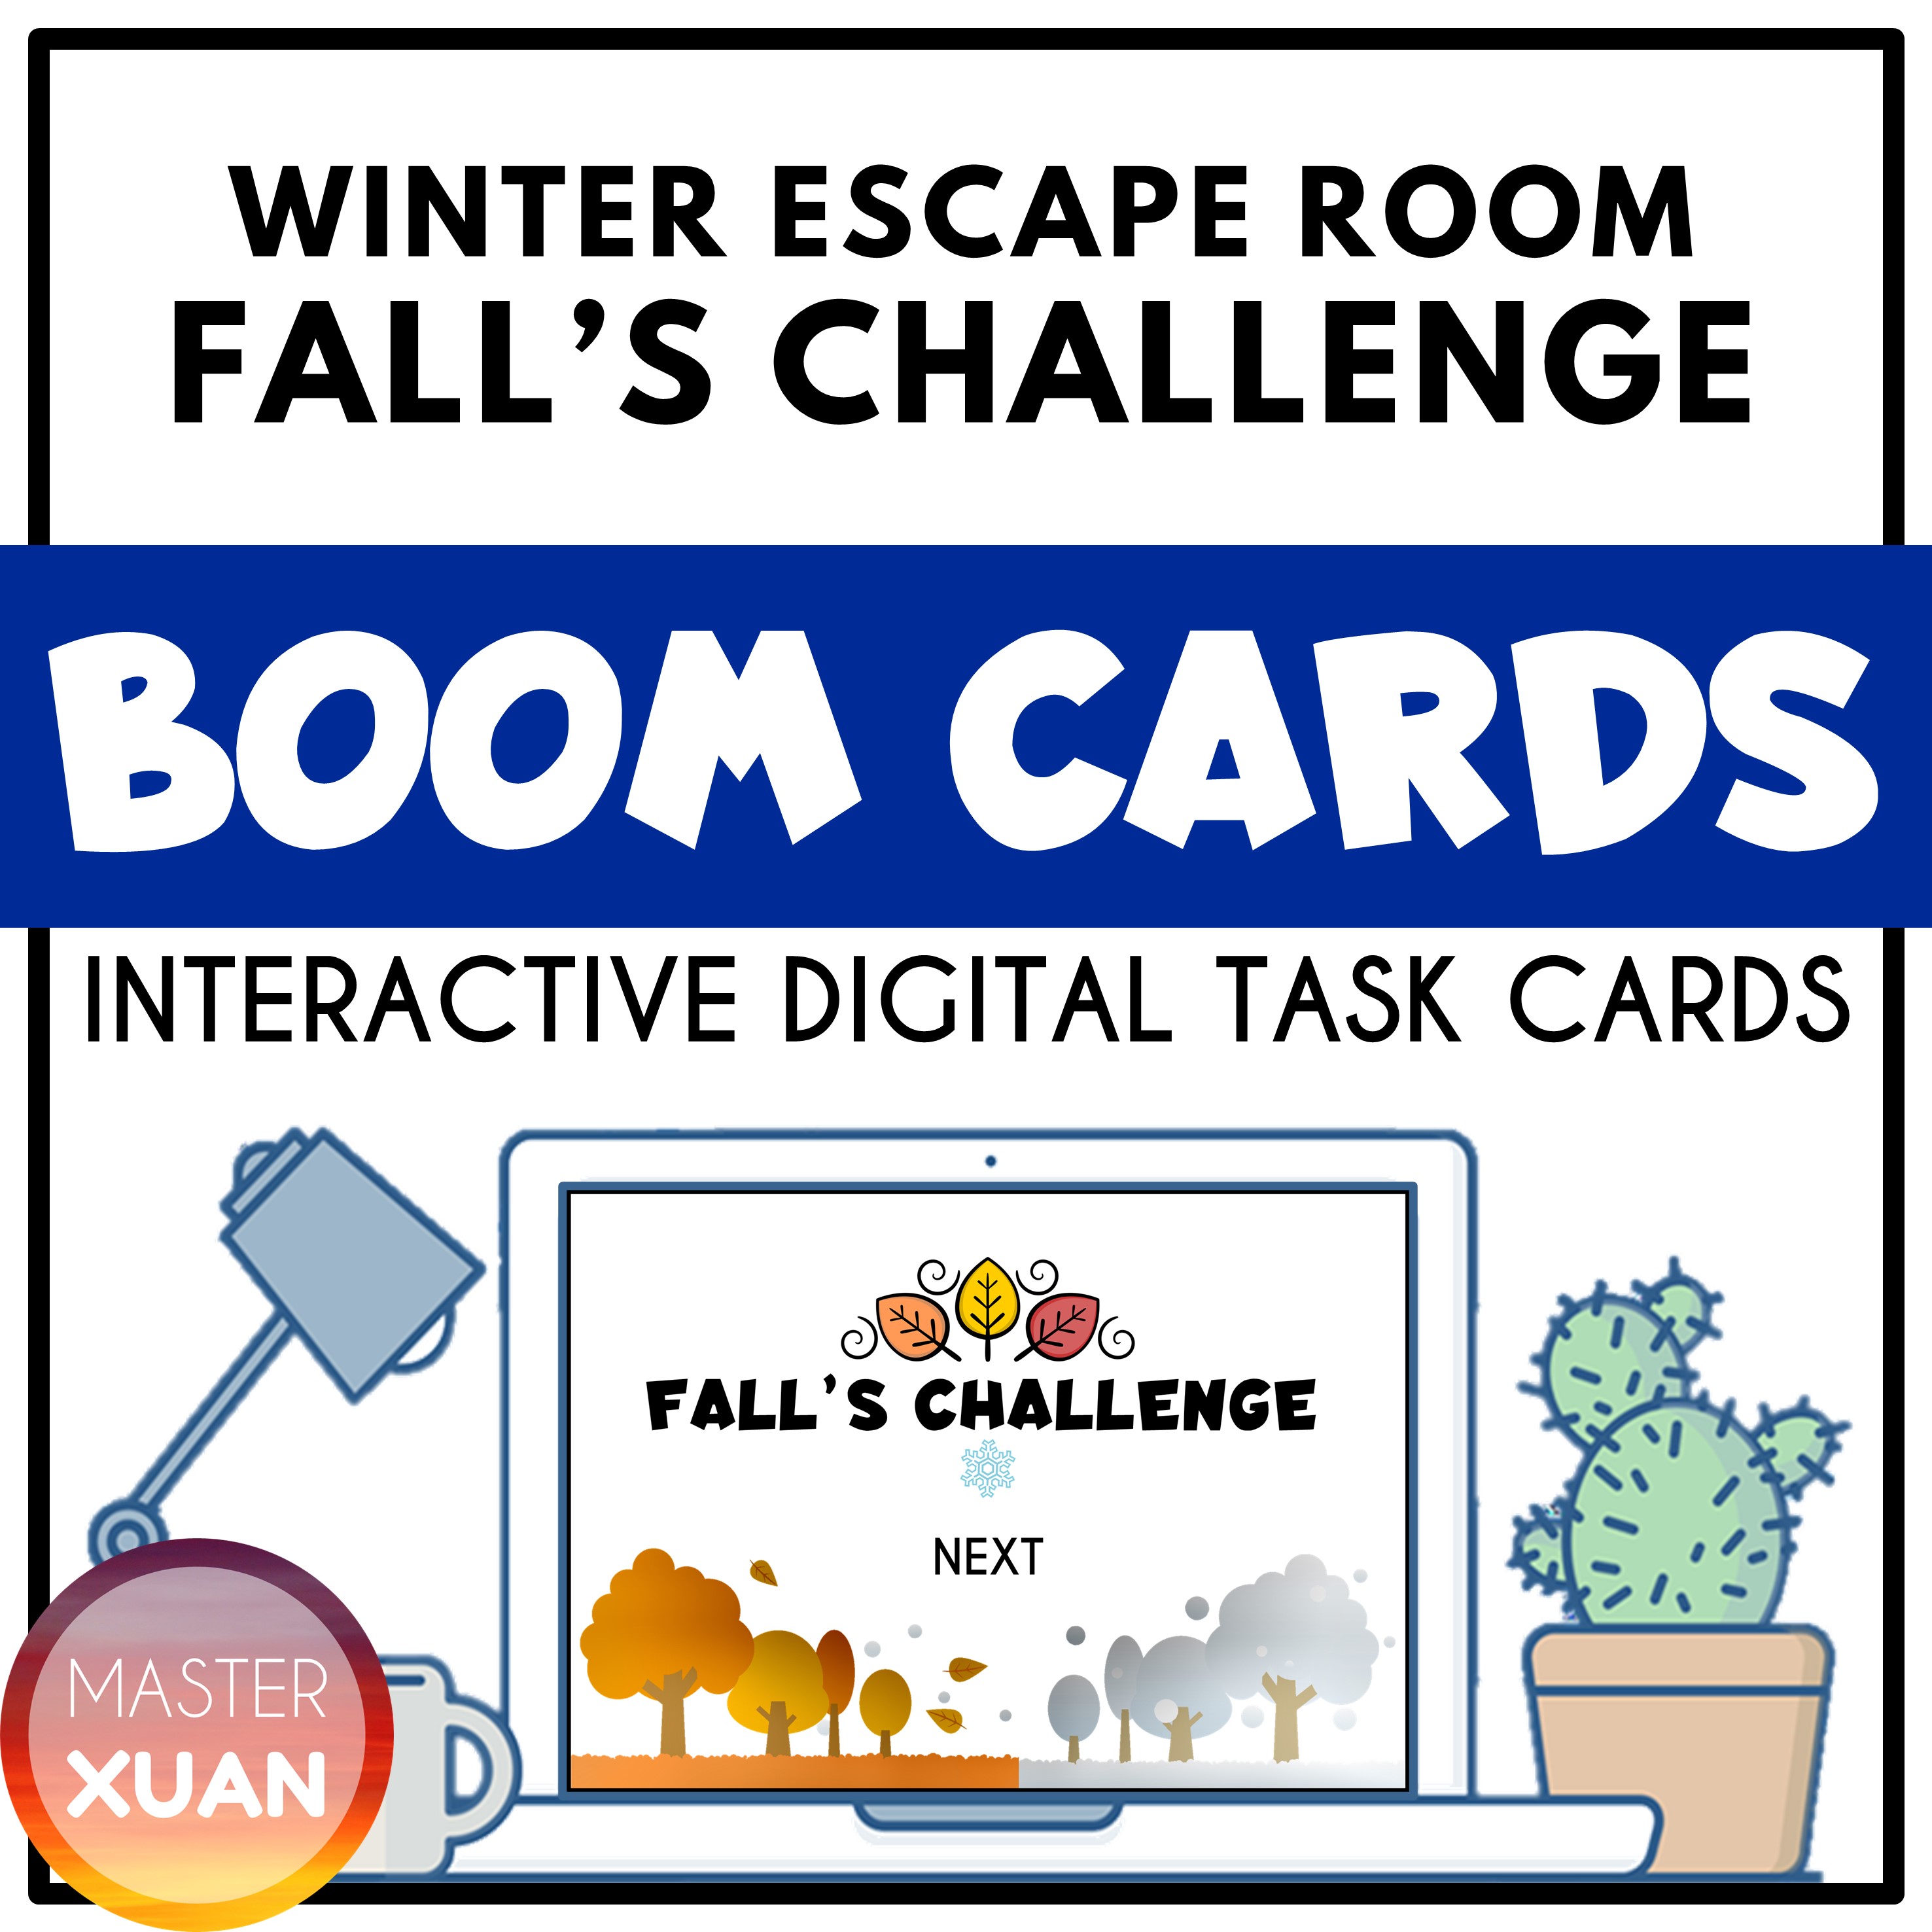 Operations escape room cover shows winter escape room Fall's Challenge